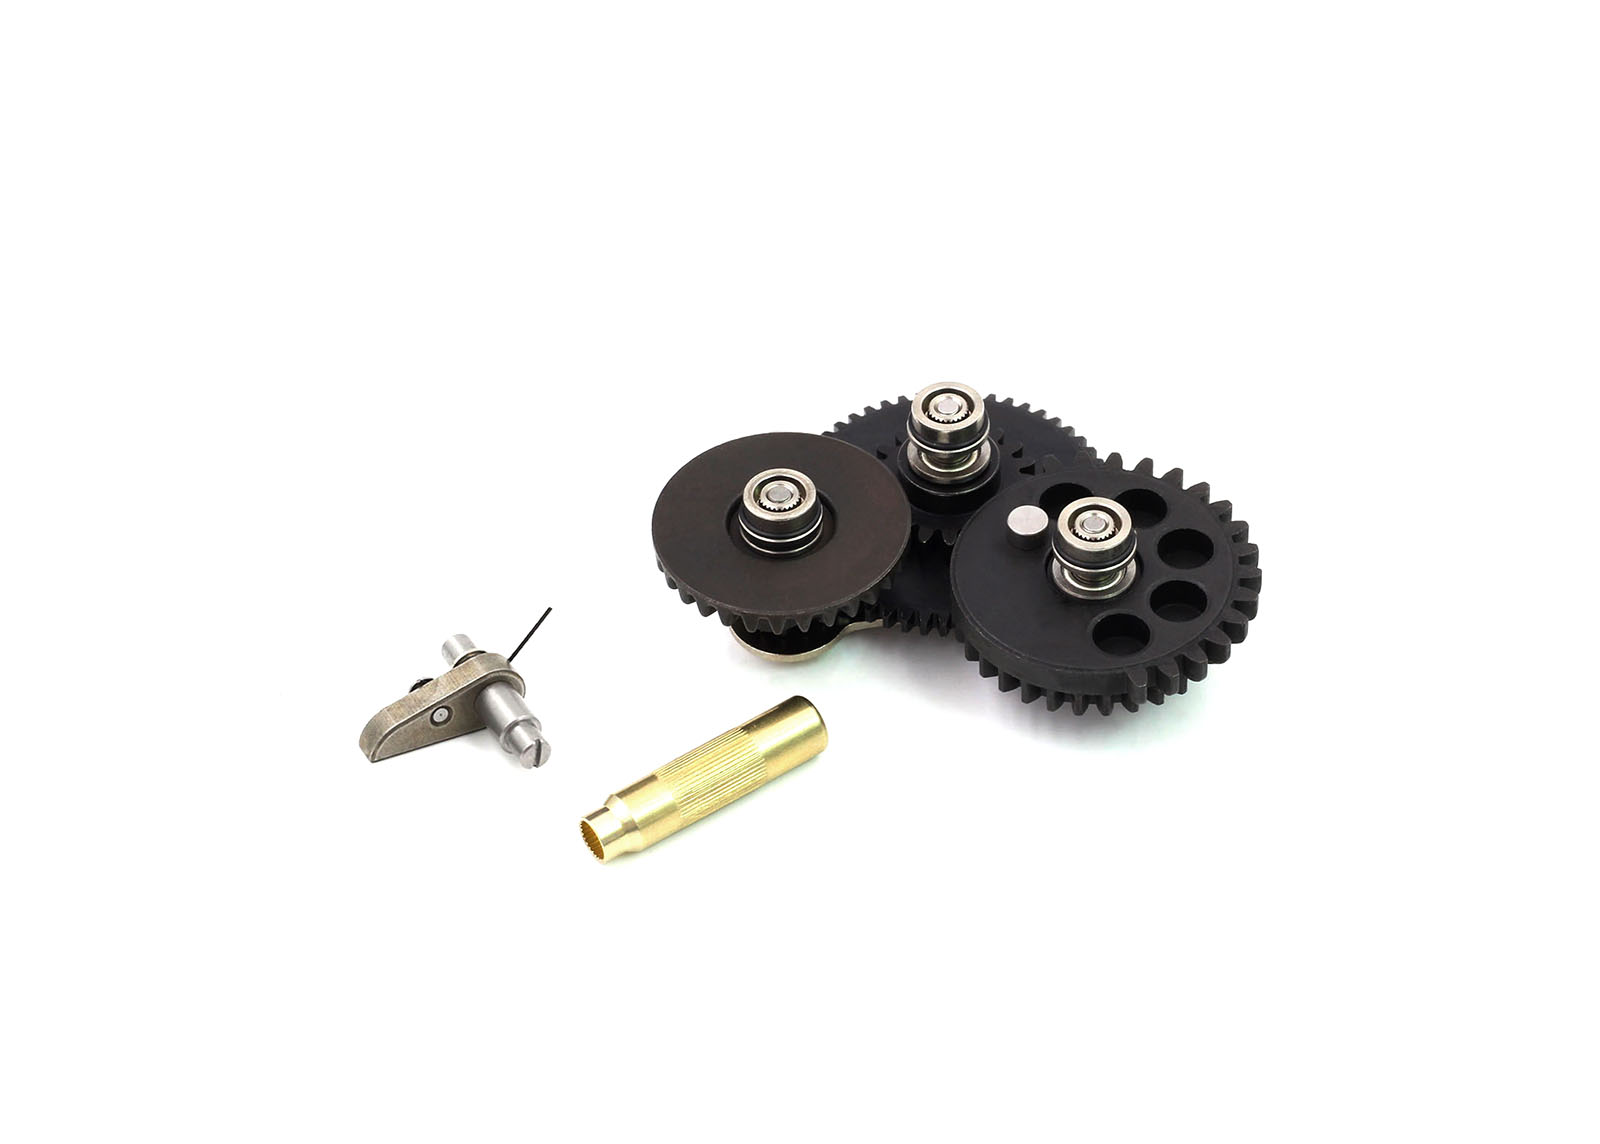 Modular Gear Set - SMOOTH 6mm Ver.2/Ver.3 (Torque 21.6:1+Gear Key) - Modify Airsoft parts